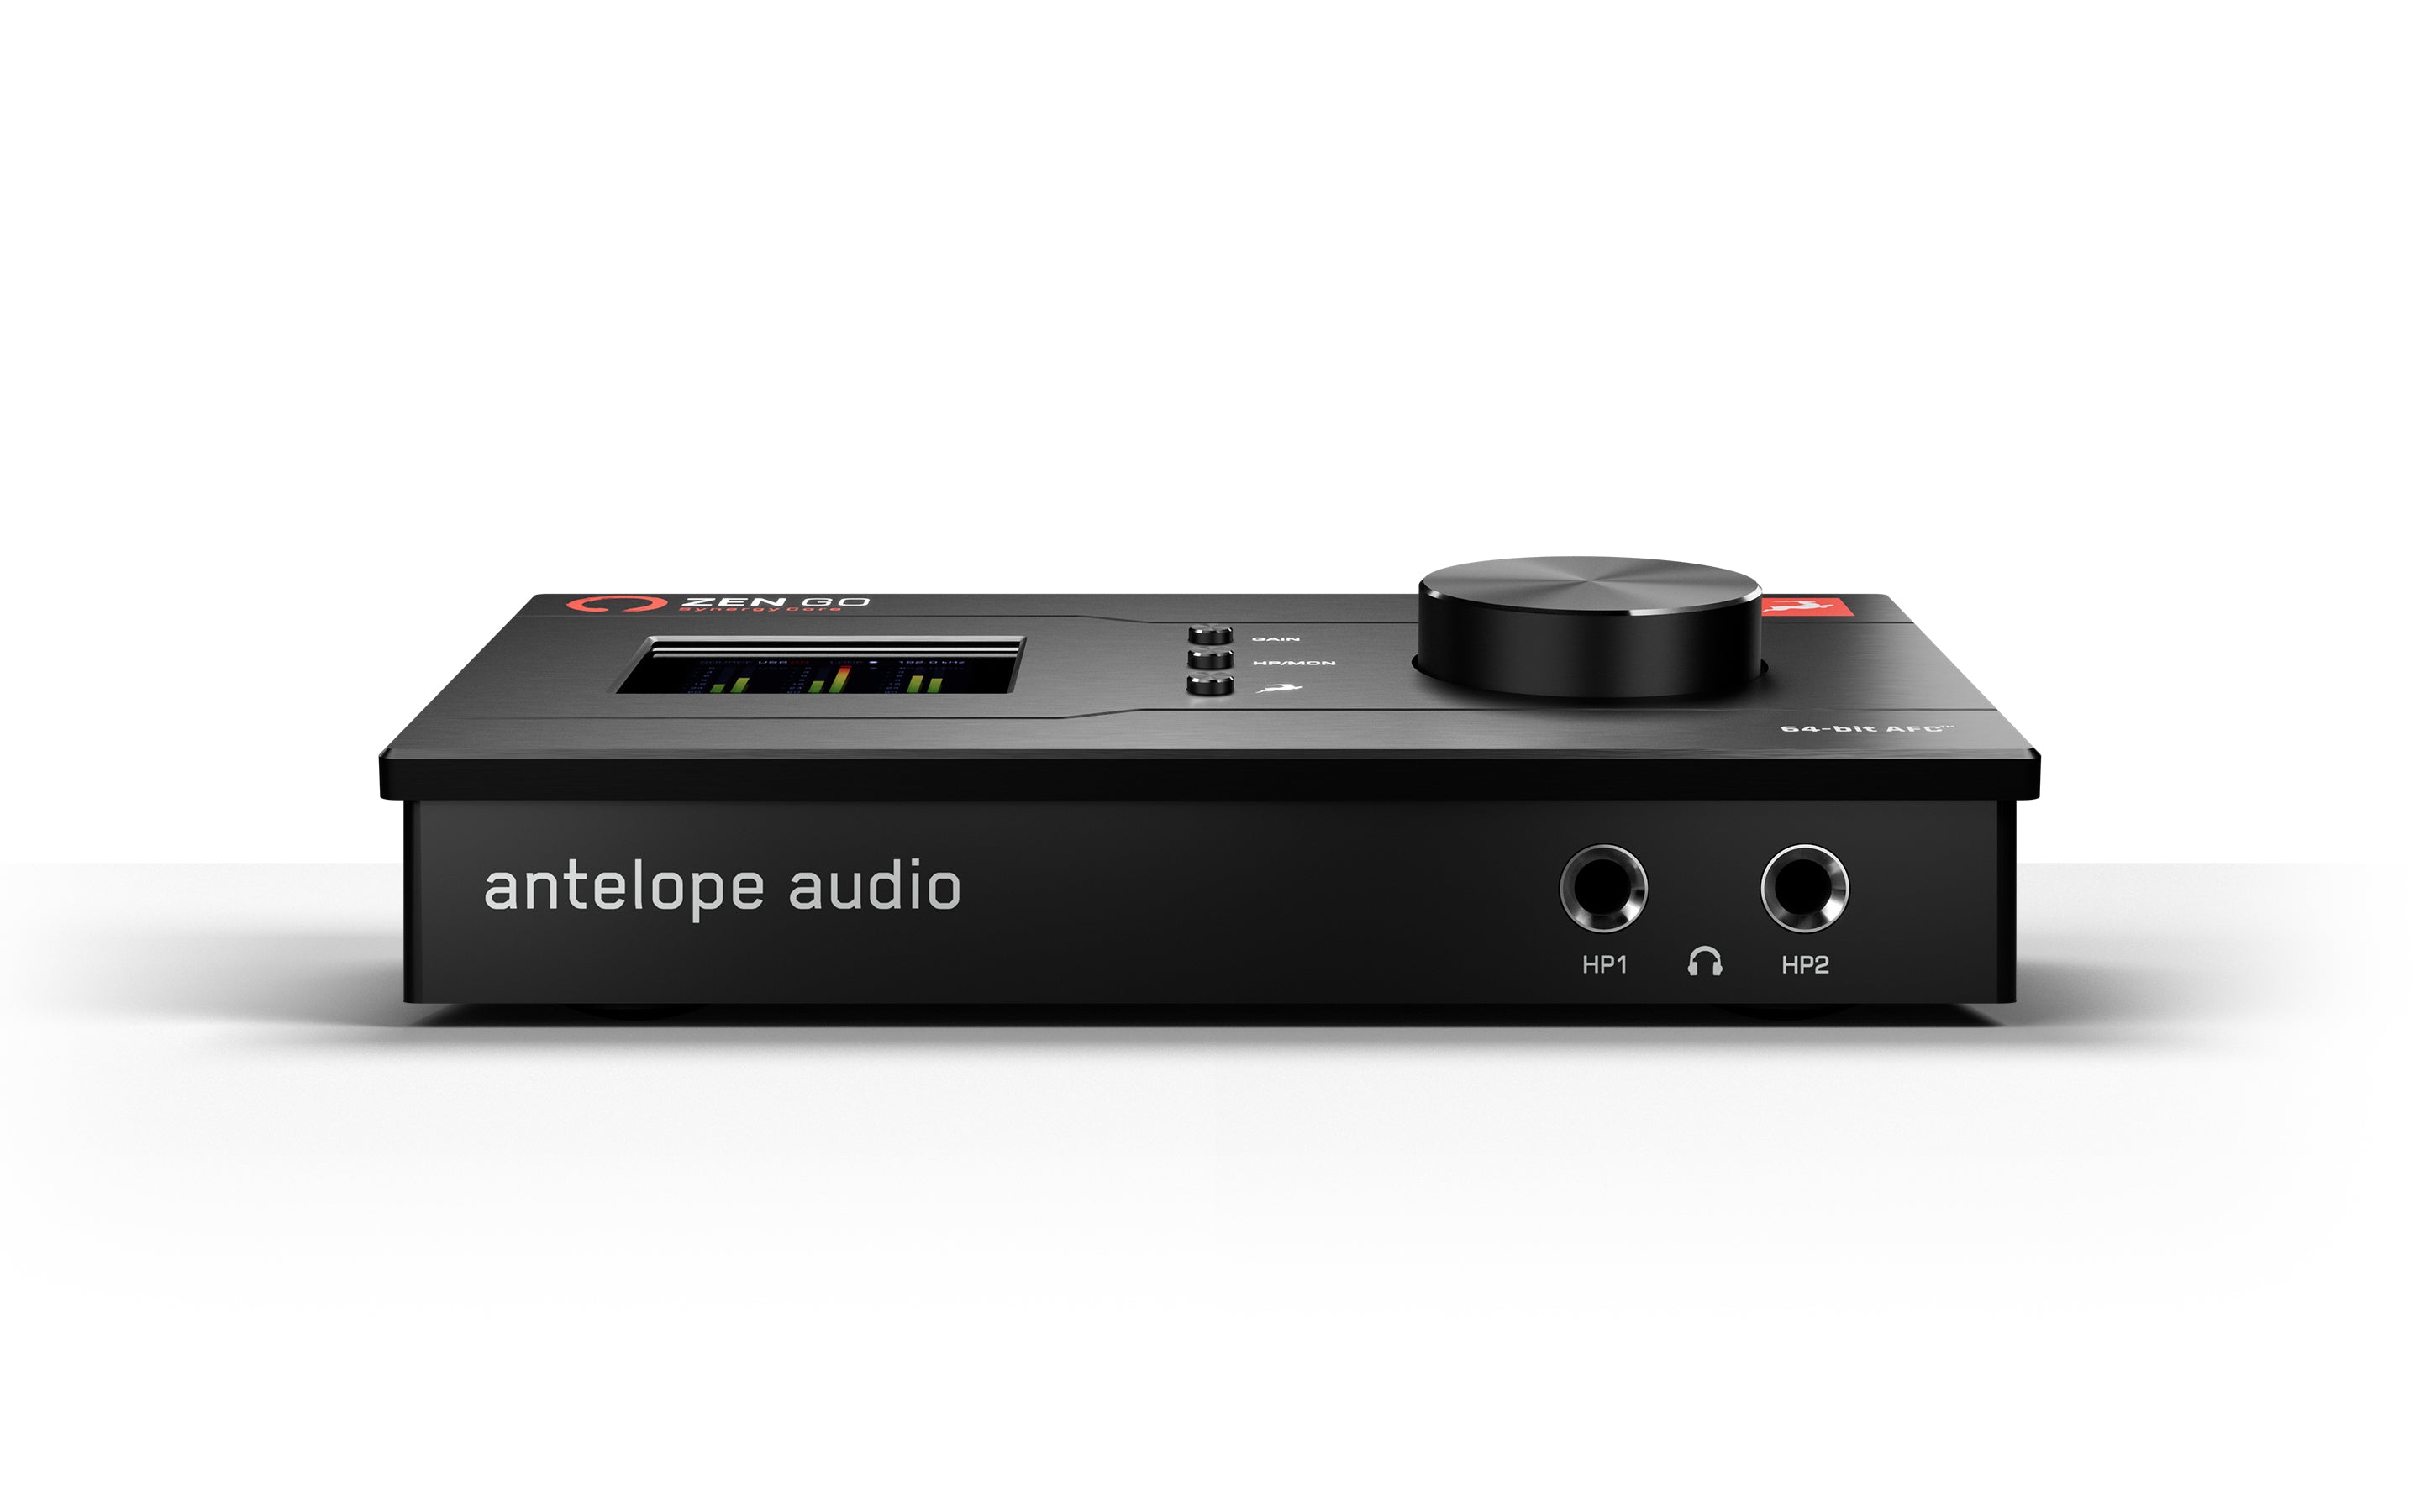 Antelope Audio Zen GO Synergy Core - Thunderbolt 3 Audio Interface